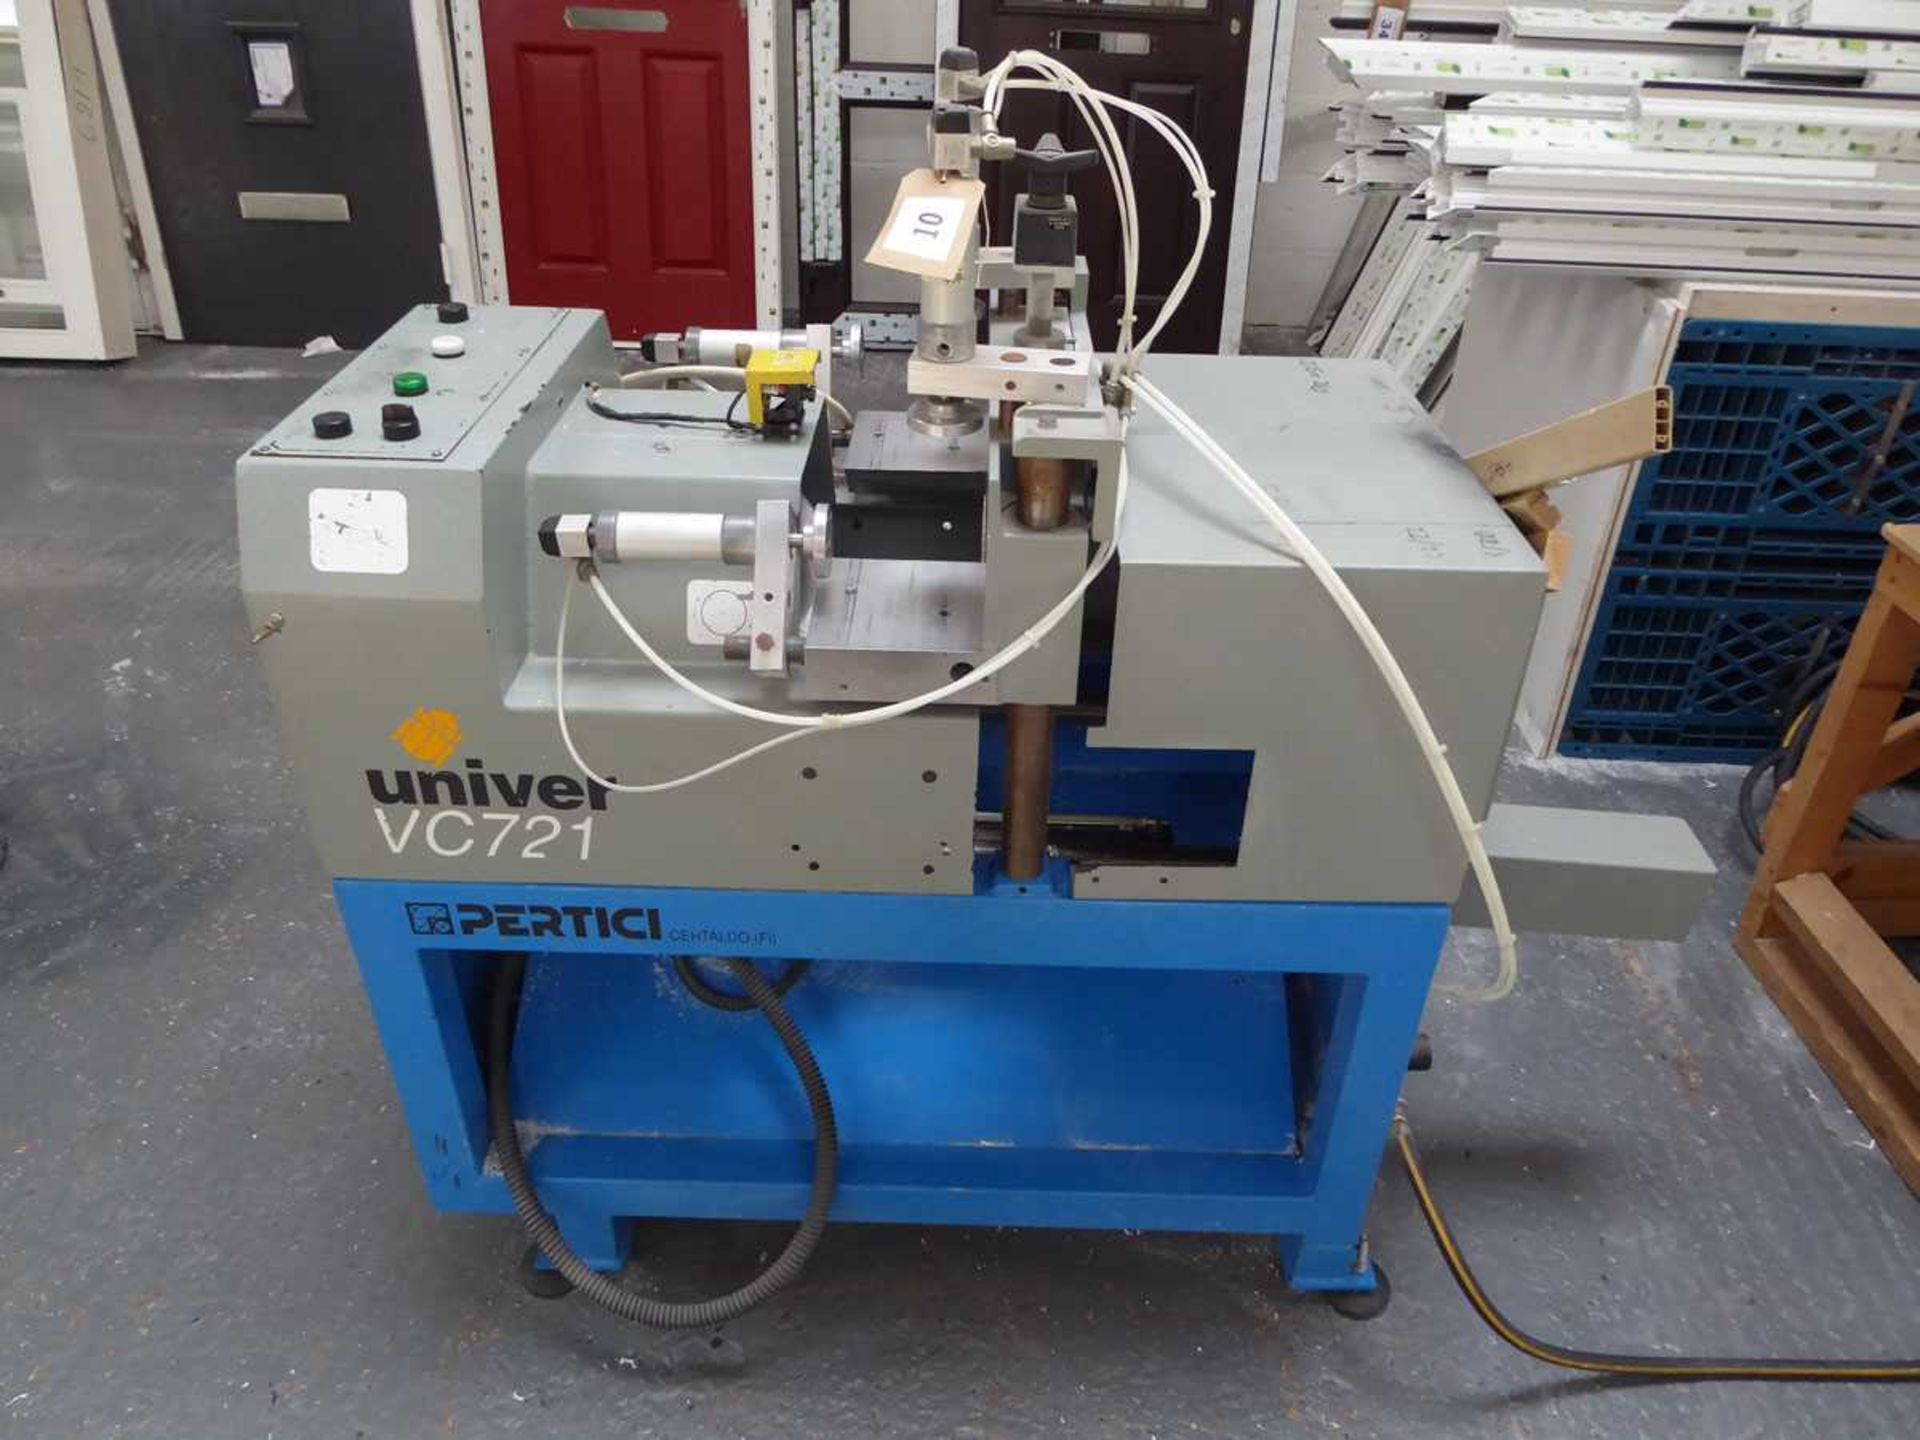 Pertici Univer VC721 semi automatic v-cutting machine, serial no. 03V209, 3 phase electric, year